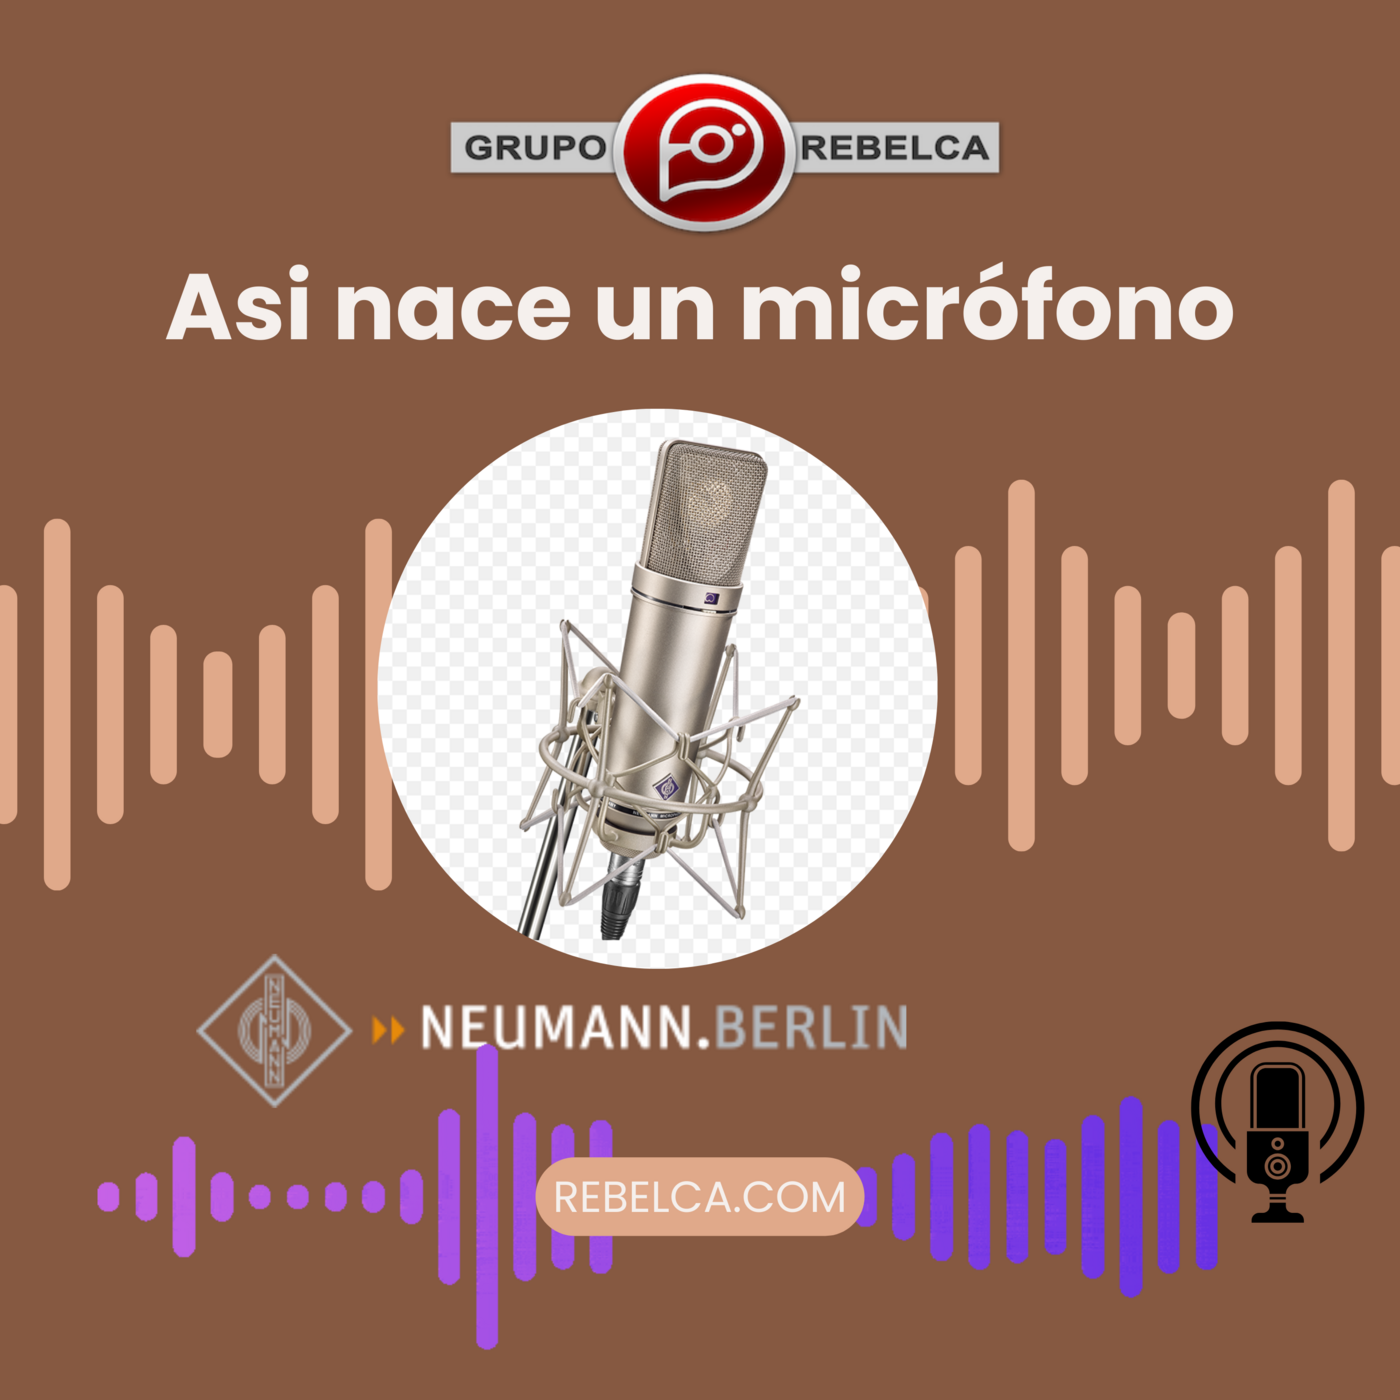 Episode 2: Newmann, Asi nace un microfono